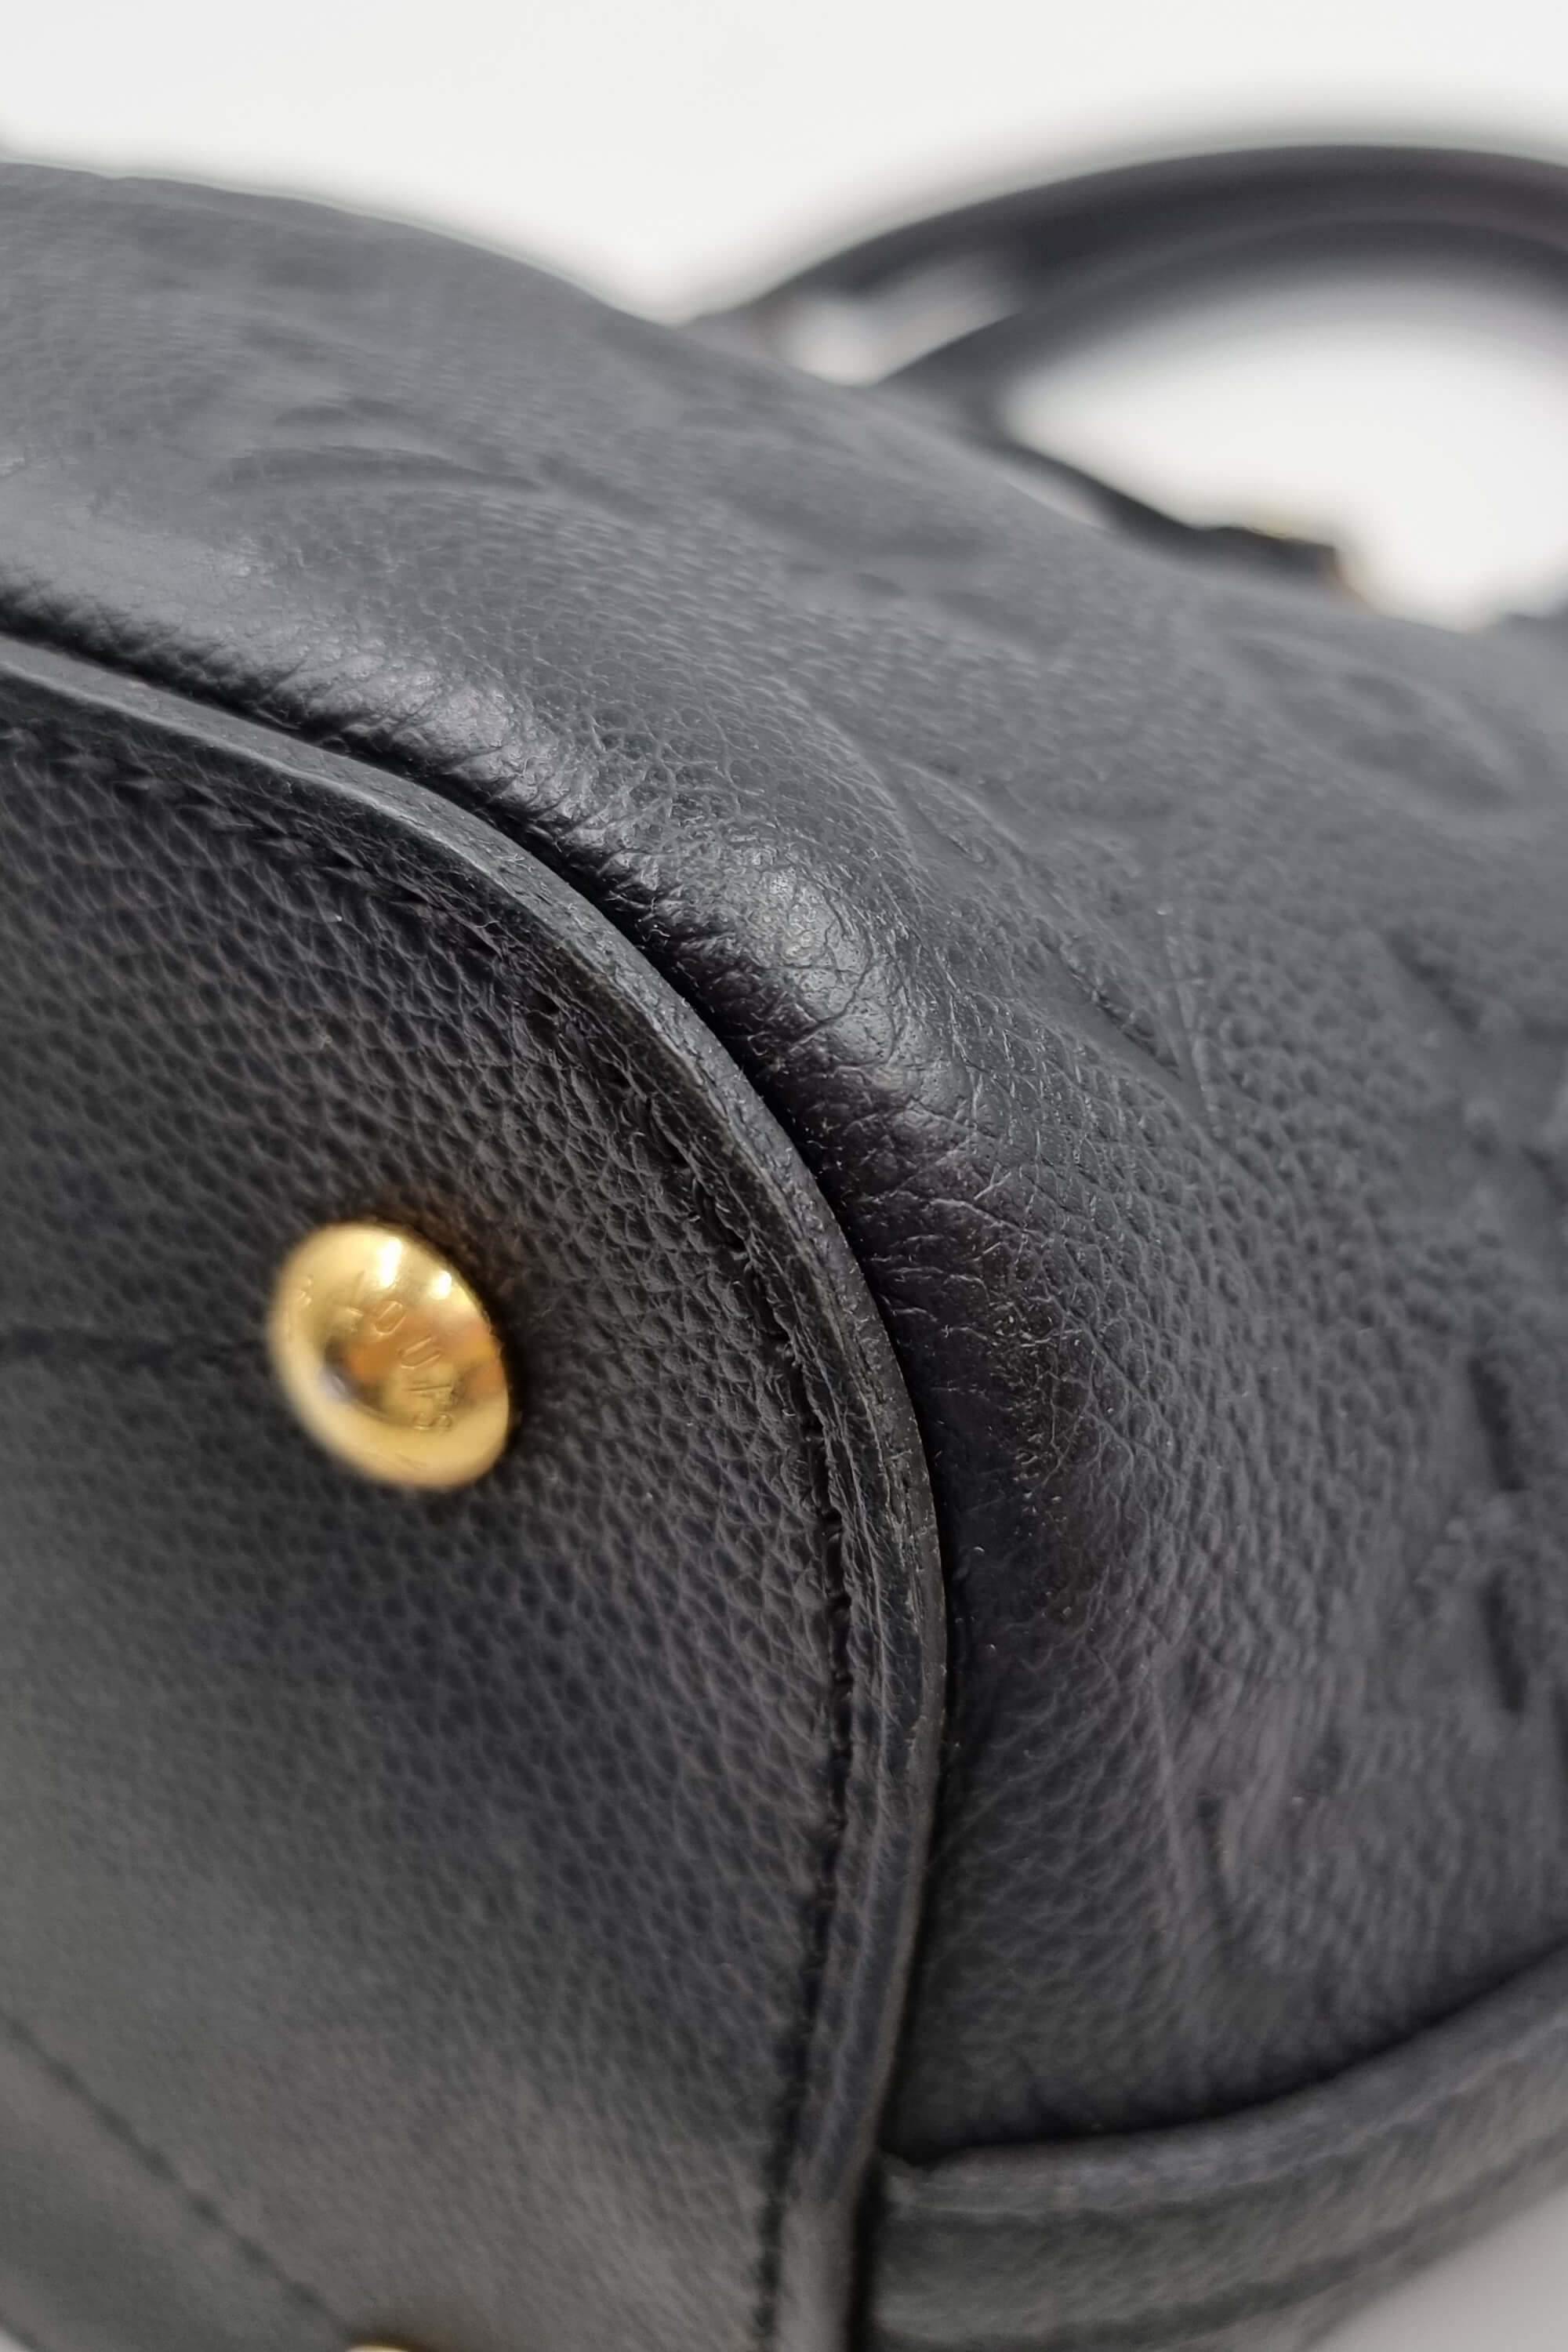 LV Mazarine PM Bag in Red Empriente Leather GHW – Brands Lover